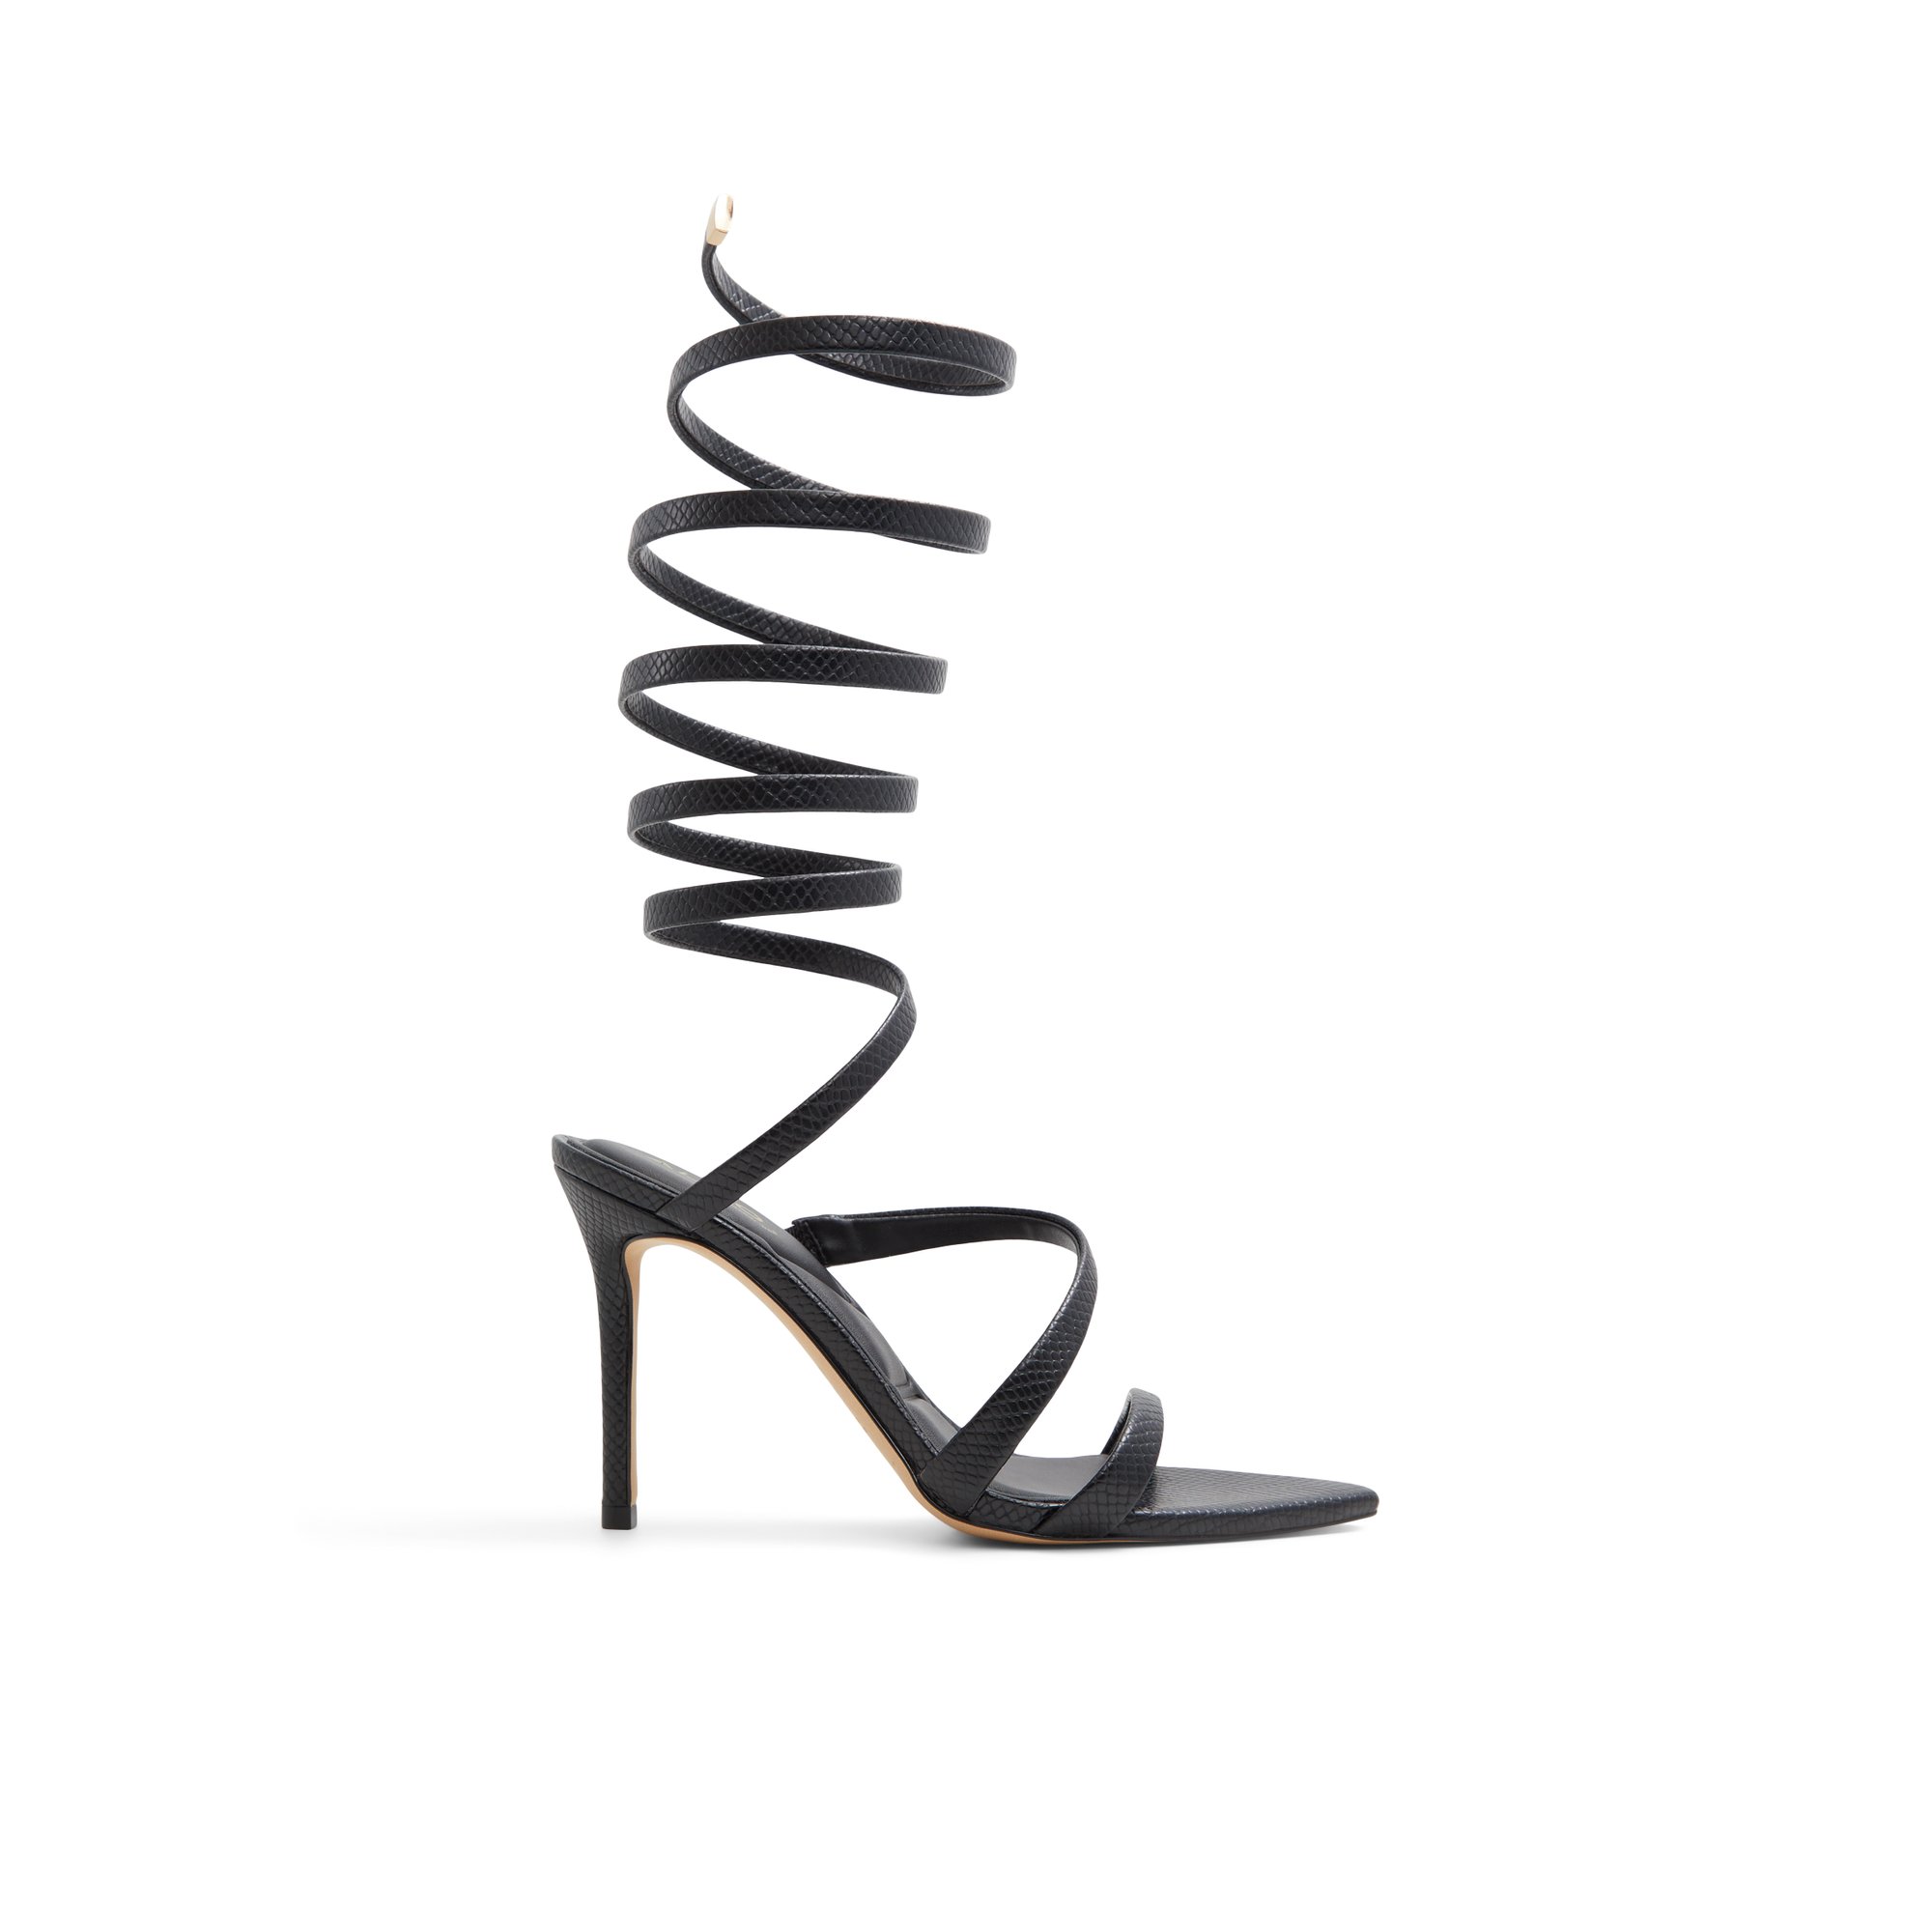 ALDO Spira - Women's Sandals Heeled - Black